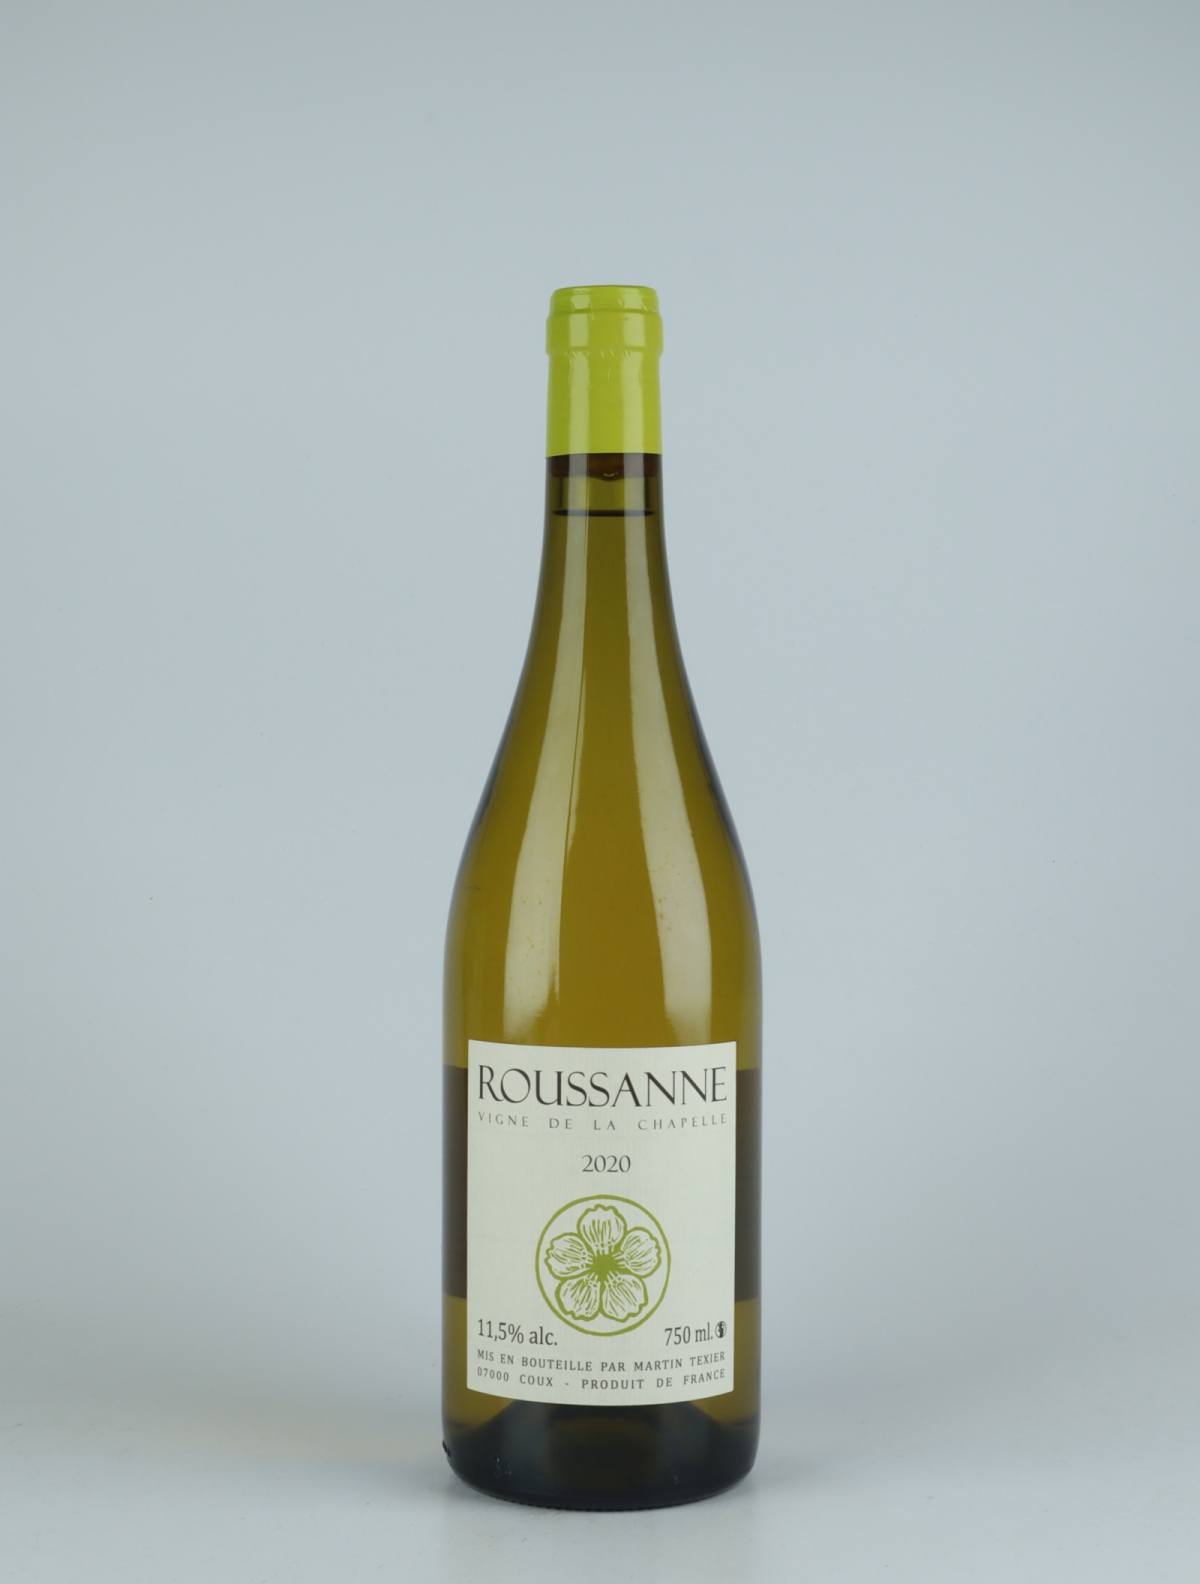 A bottle 2020 Roussanne White wine from Martin Texier, Rhône in France